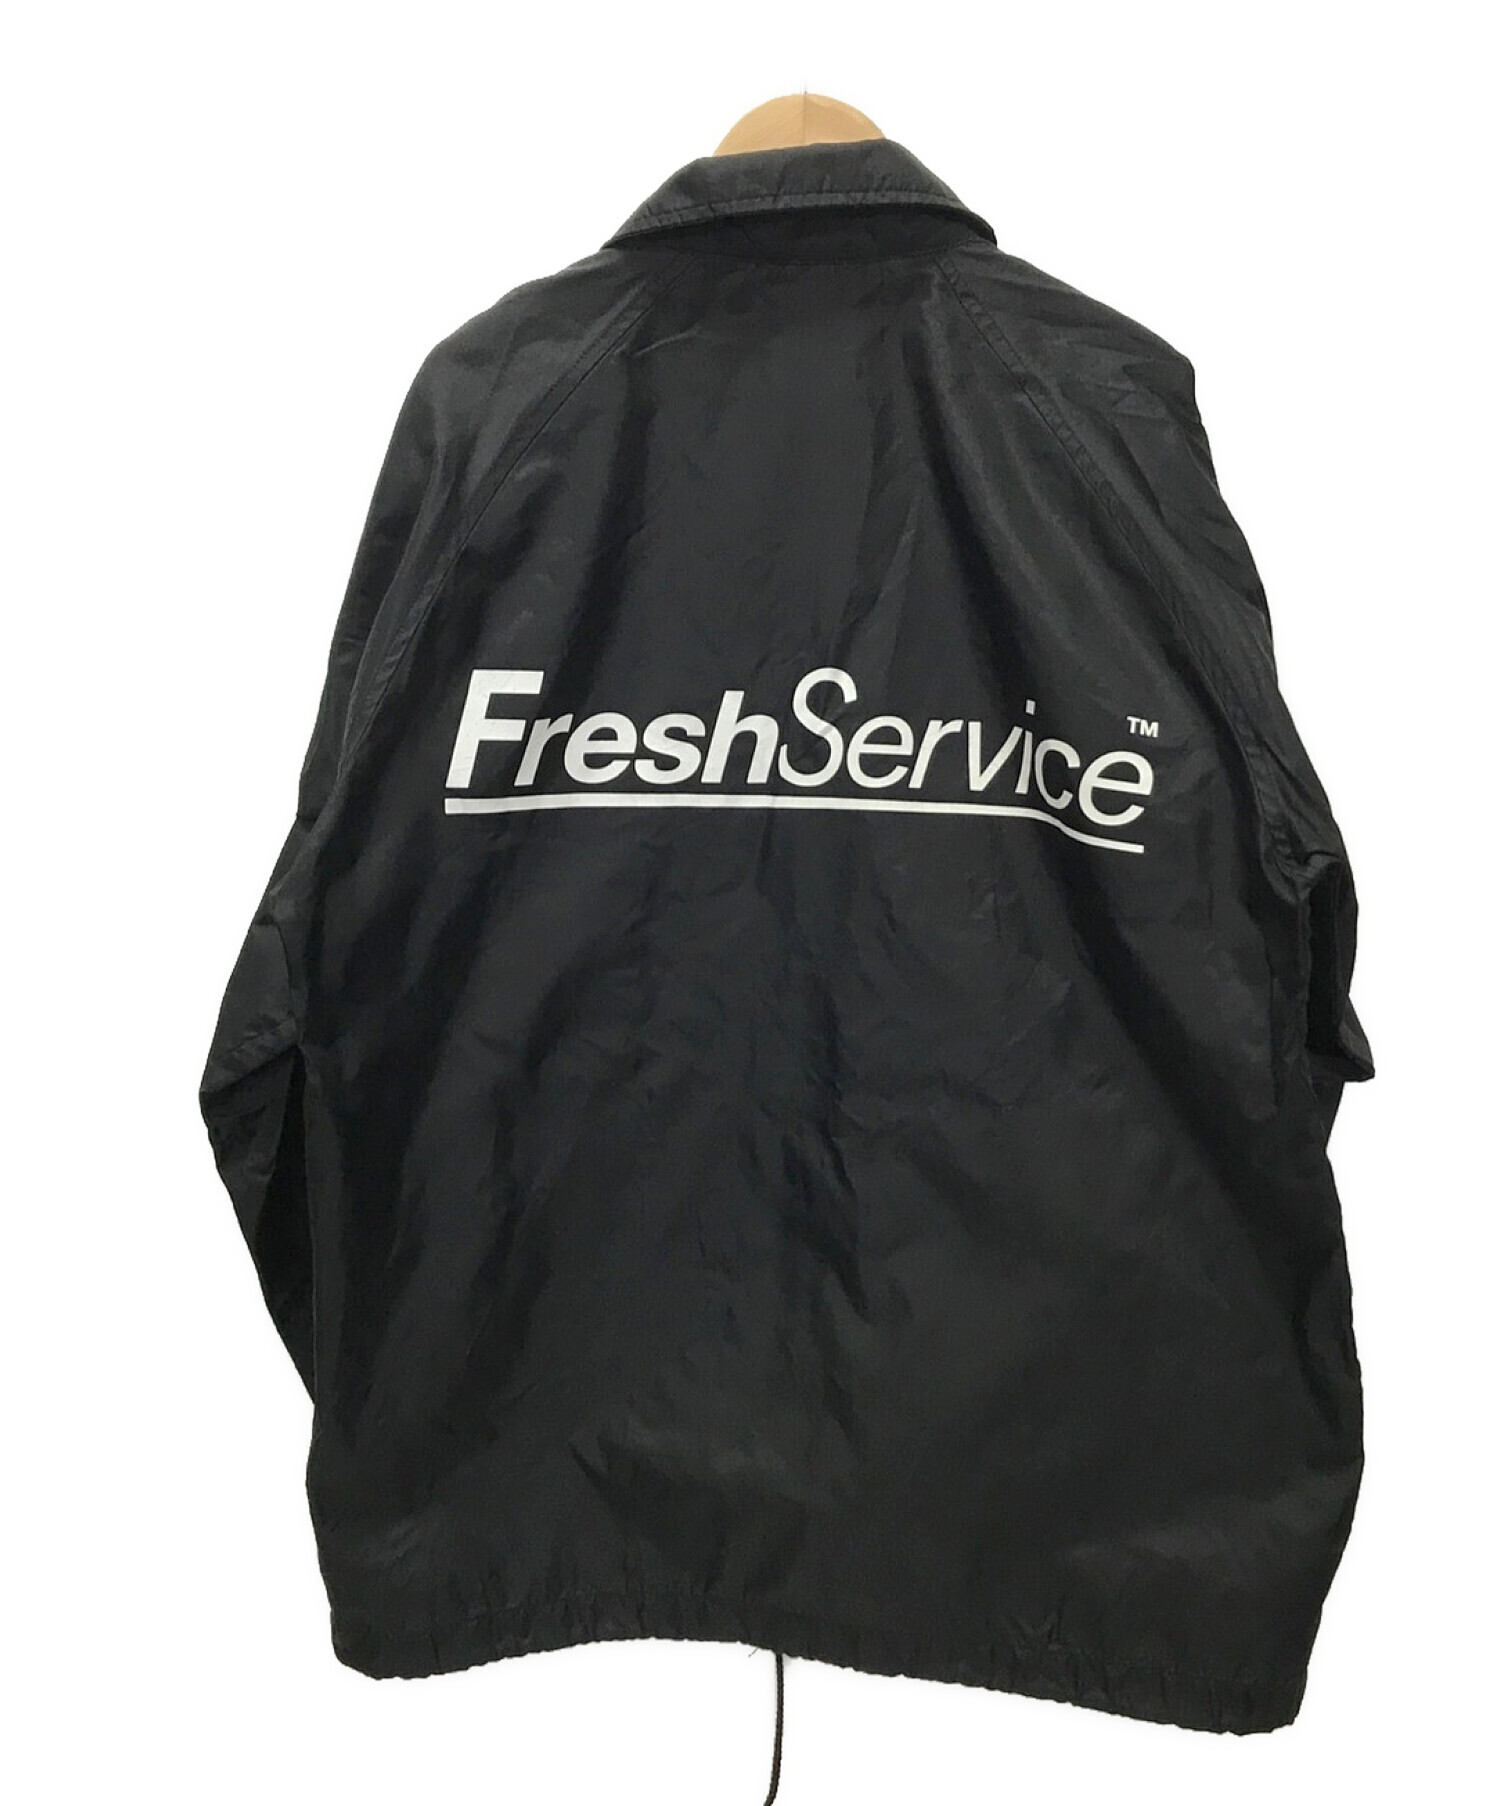 FreshService (フレッシュサービス) Corporate Coach Jacket ブラック サイズ:M